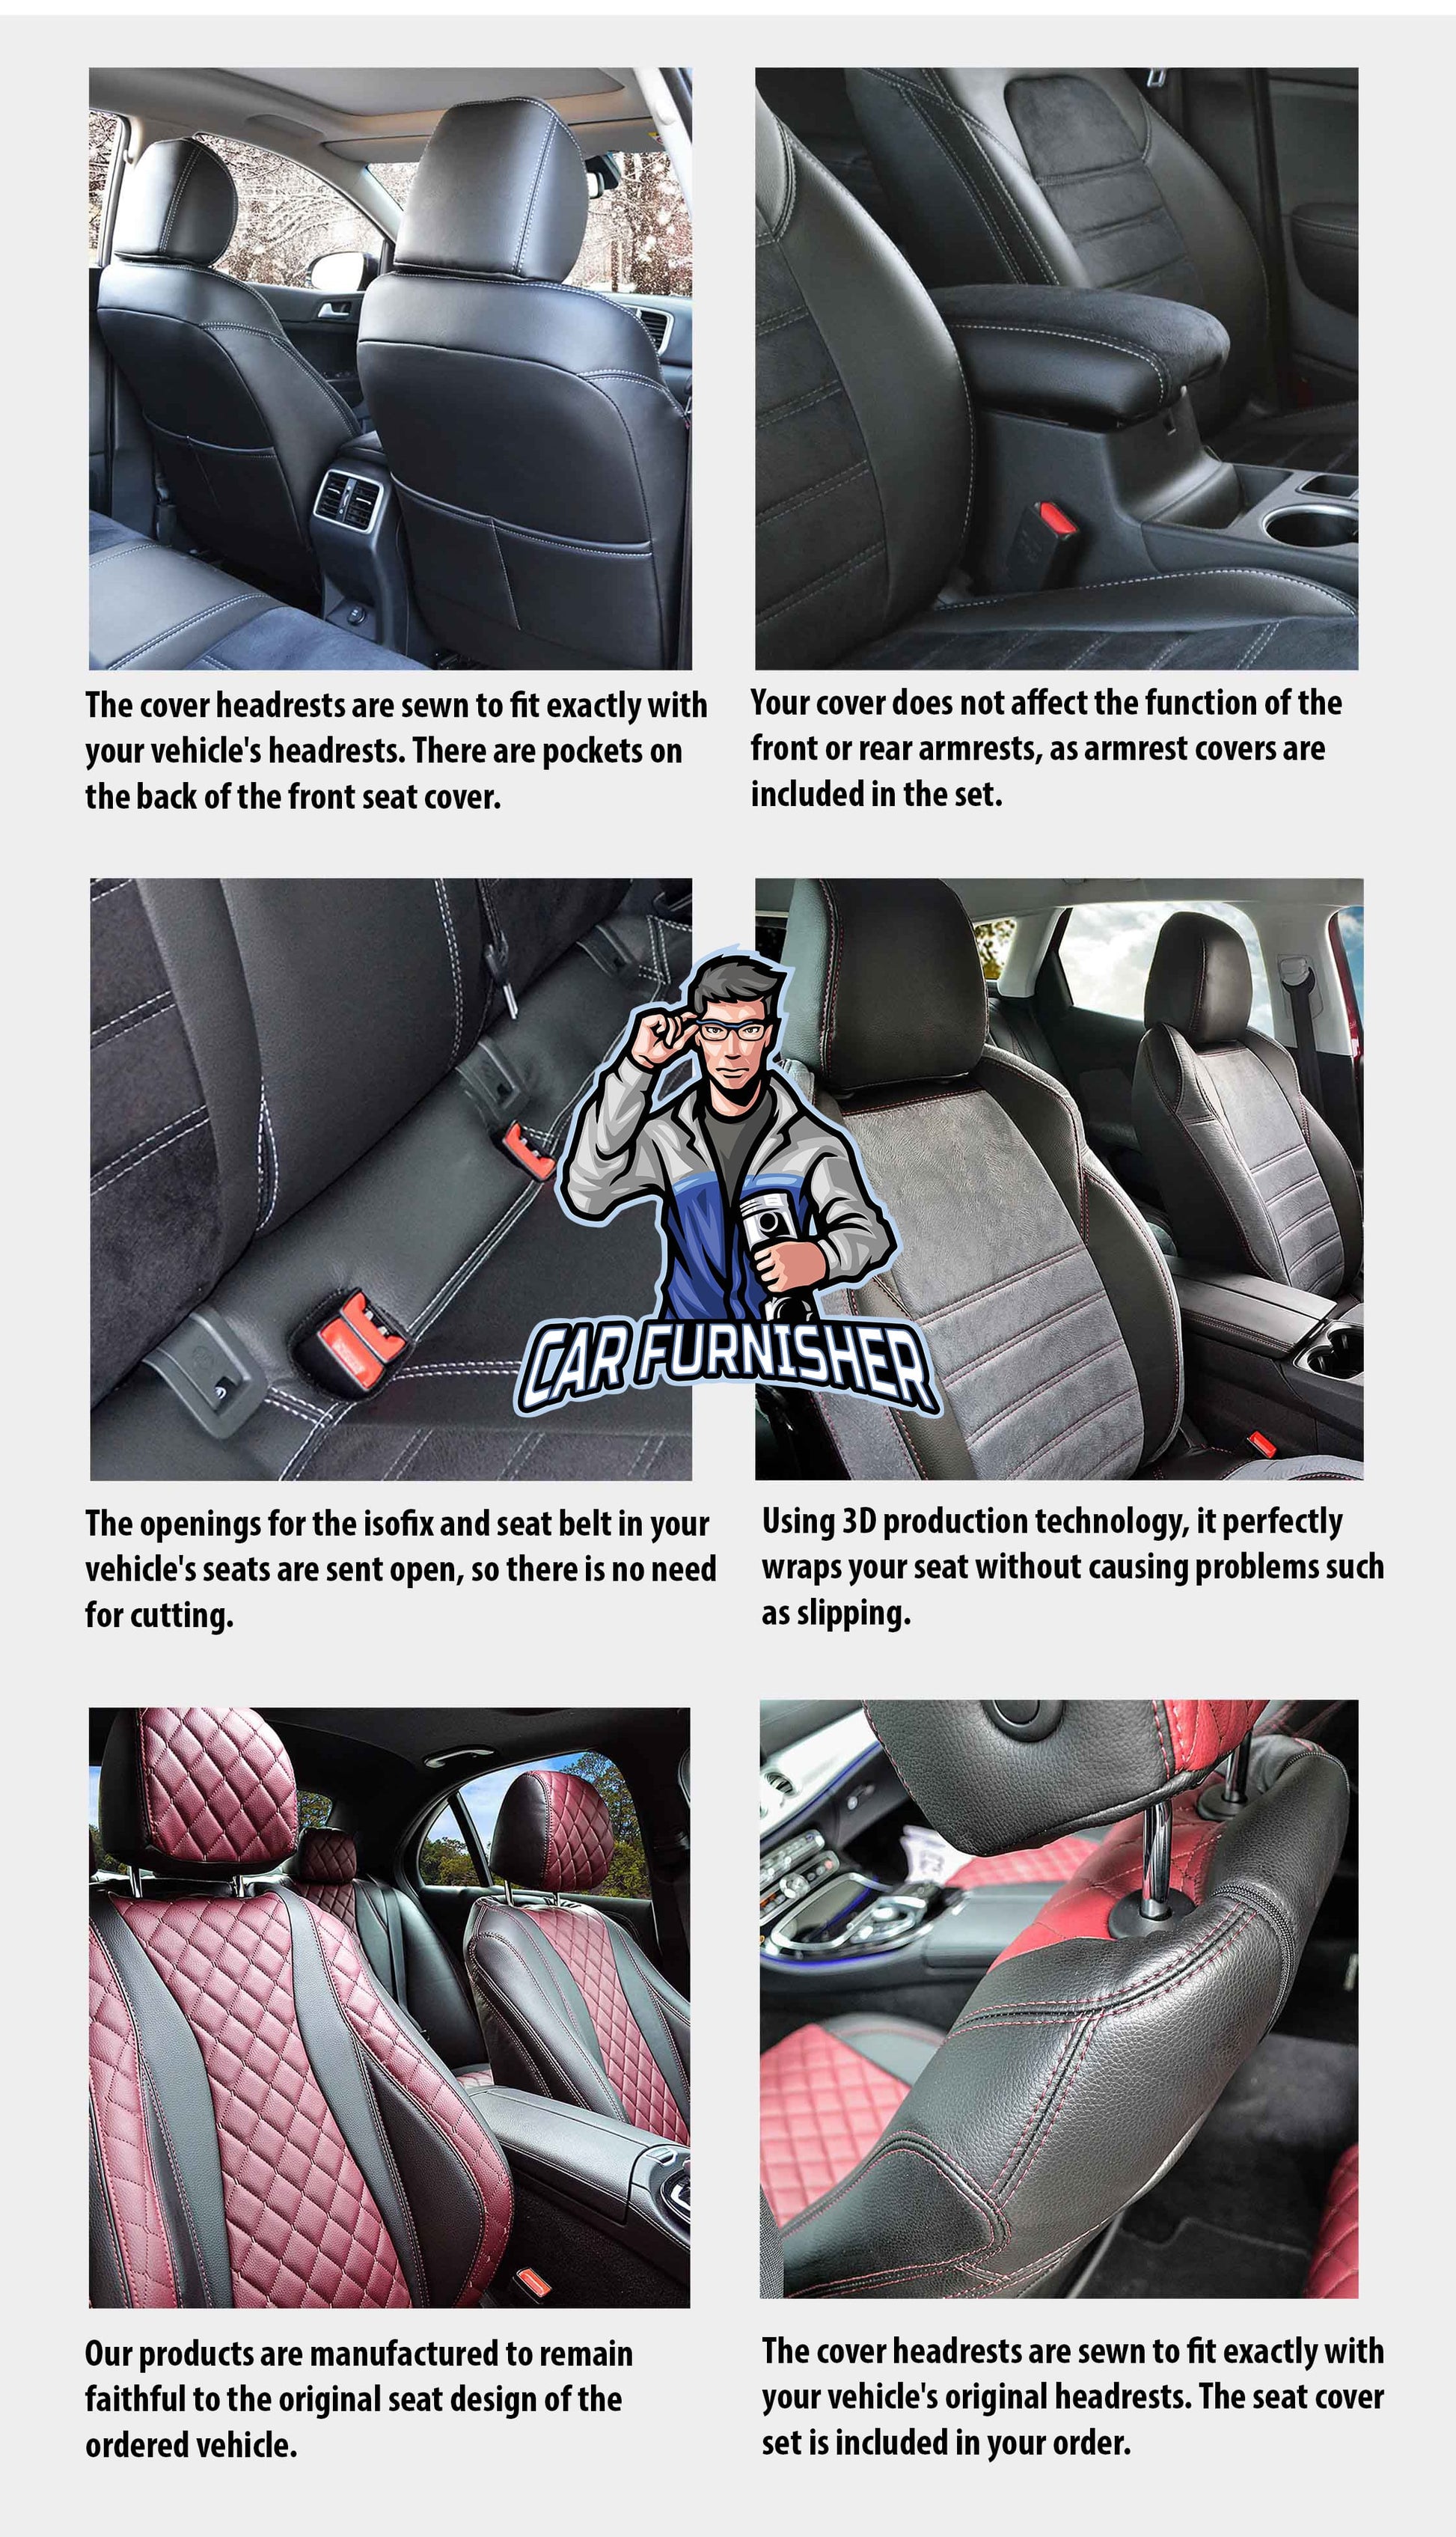 Peugeot Boxer Seat Covers Paris Leather & Jacquard Design Dark Beige Leather & Jacquard Fabric